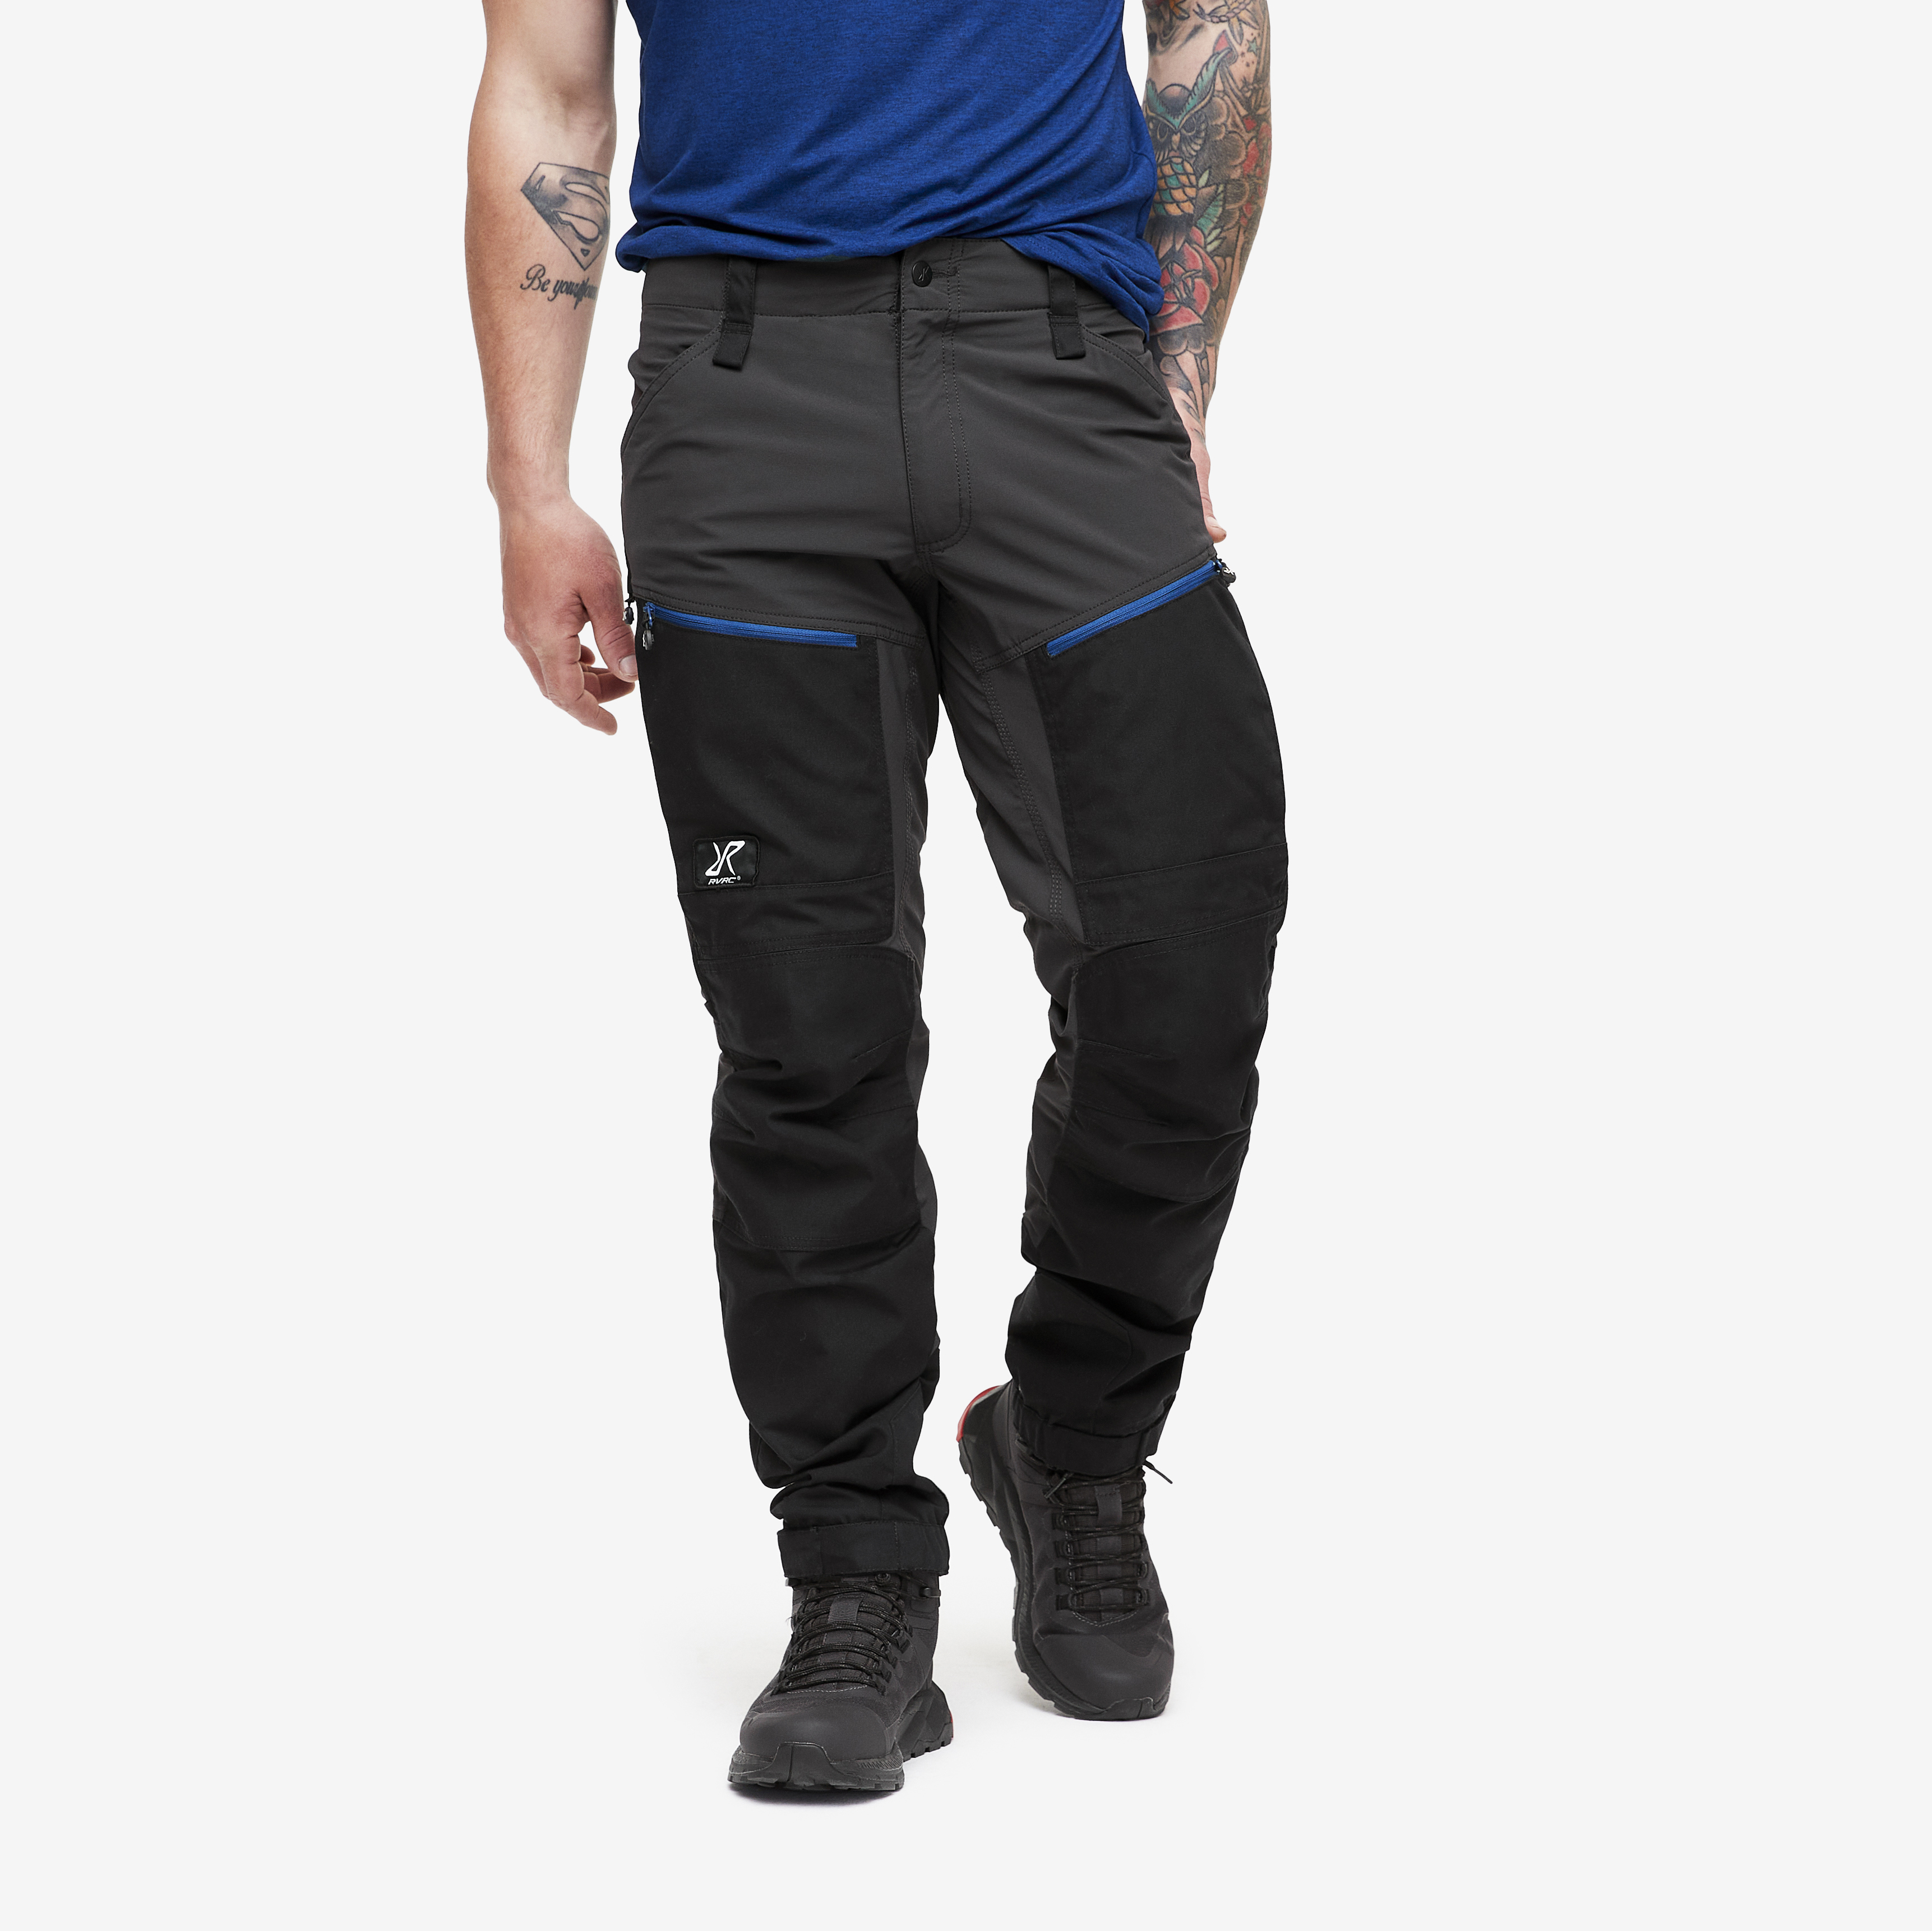 RVRC GP Pro Trousers Anthracite/Dark Blue Men